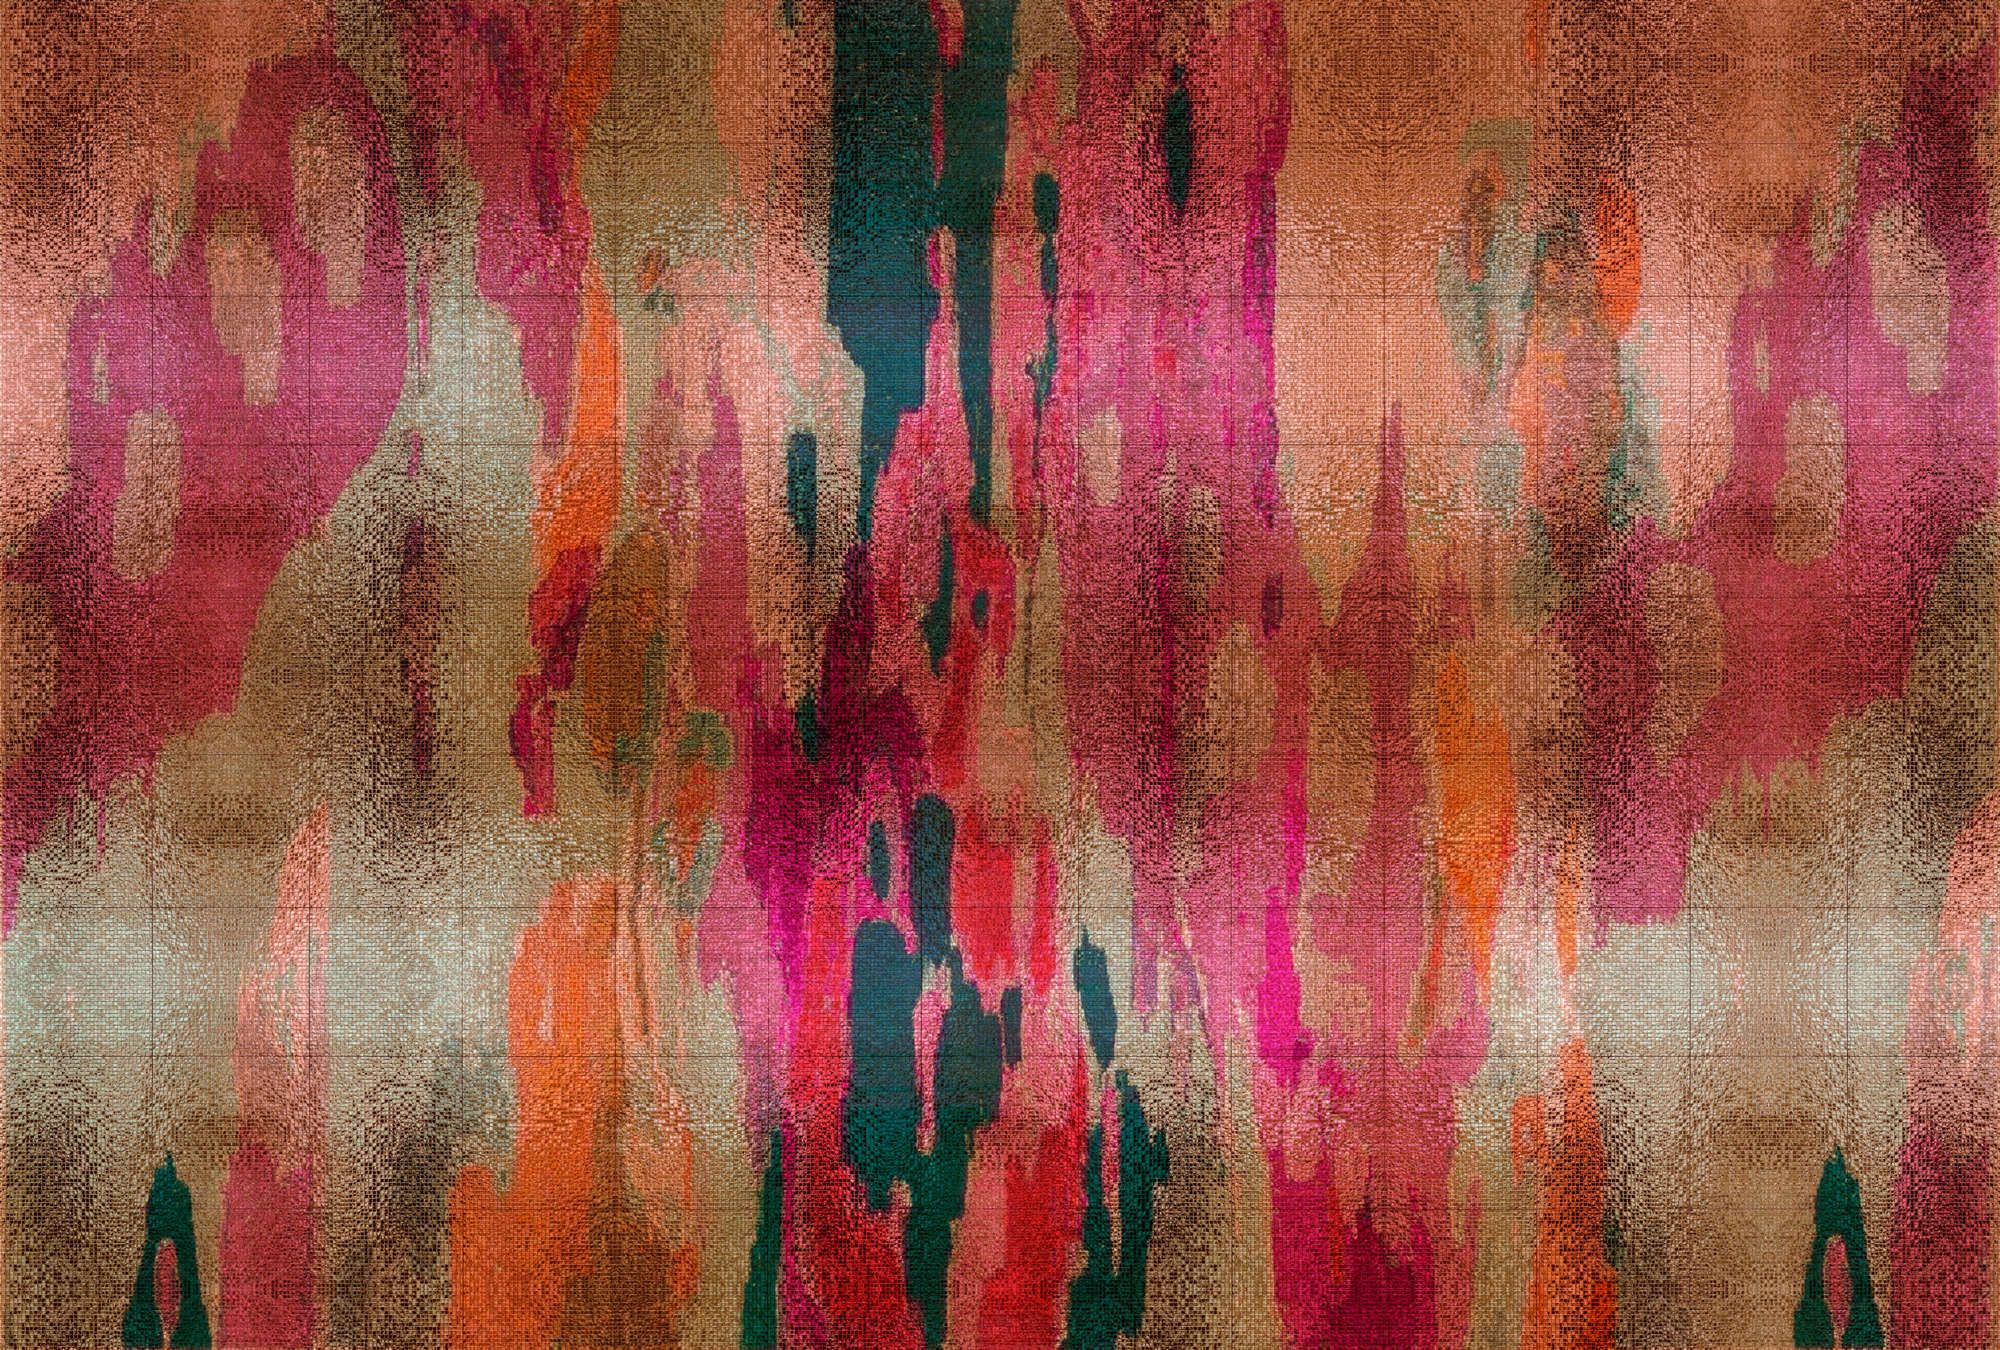             Digital behang »marielle 2« - kleurovergangen violet, oranje, petrol met mozaïekstructuur - mat, glad vlies
        